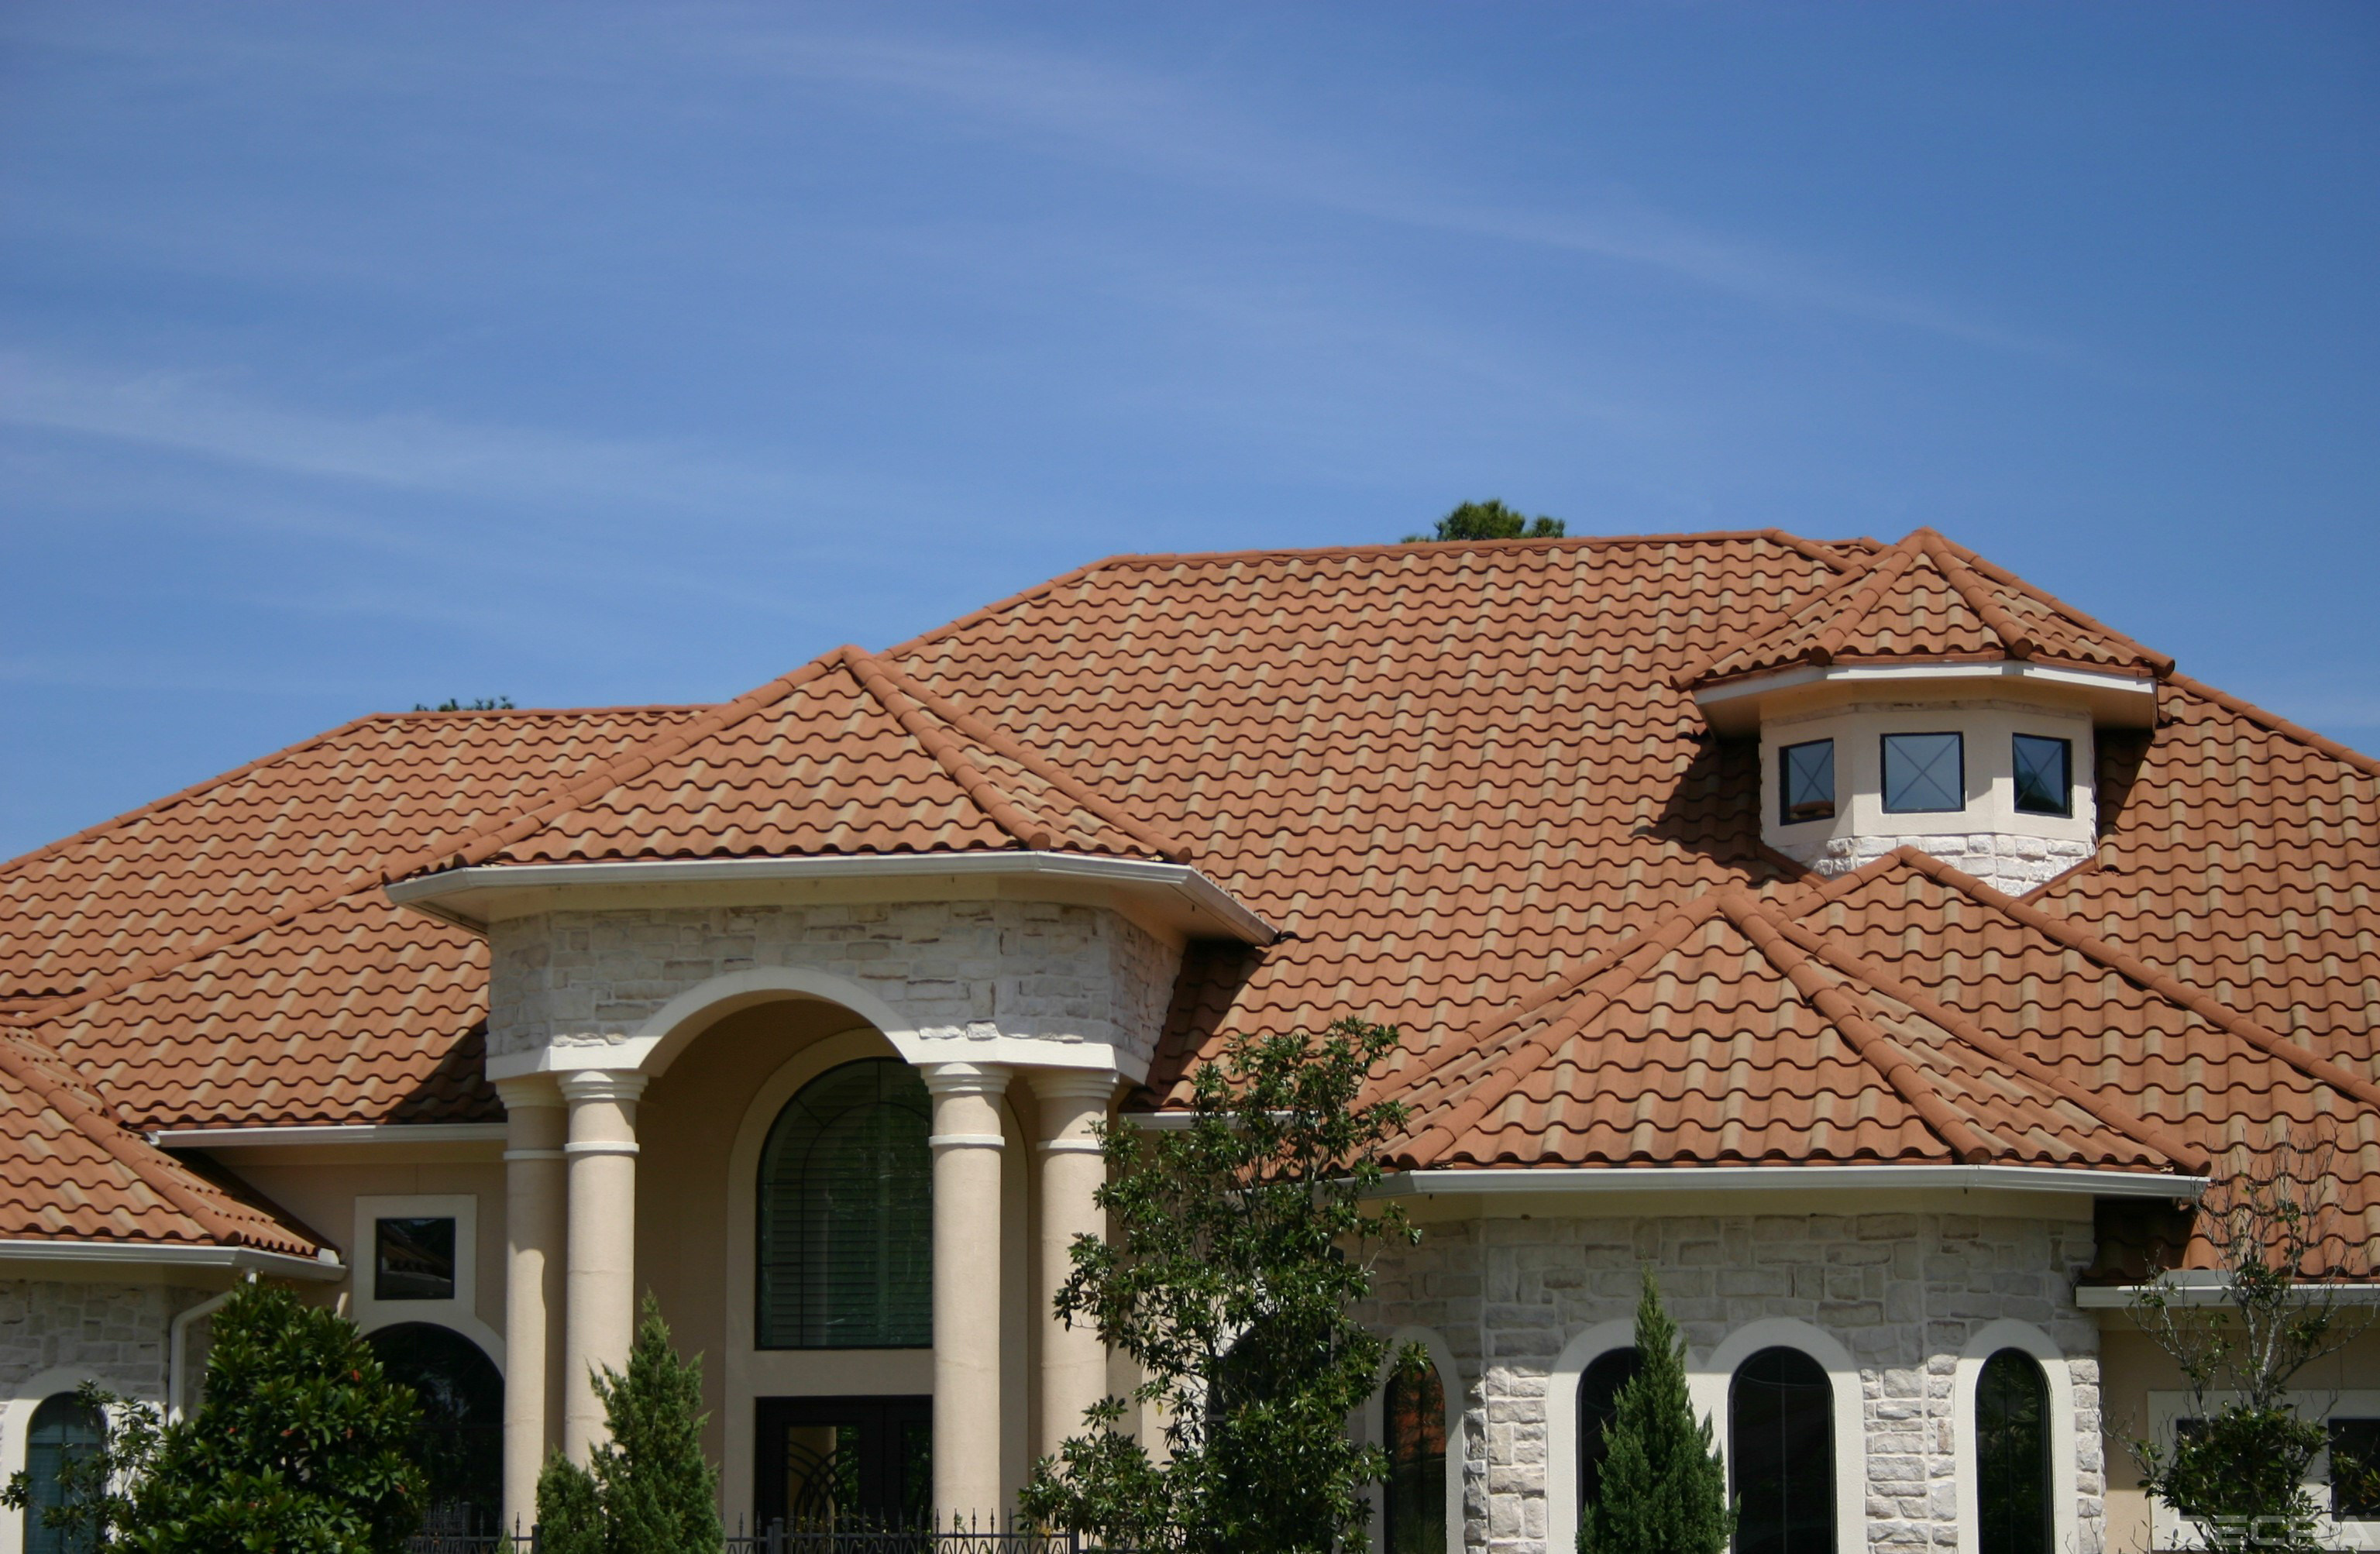 Decra Villa Tile Roofing for North Texas Homes